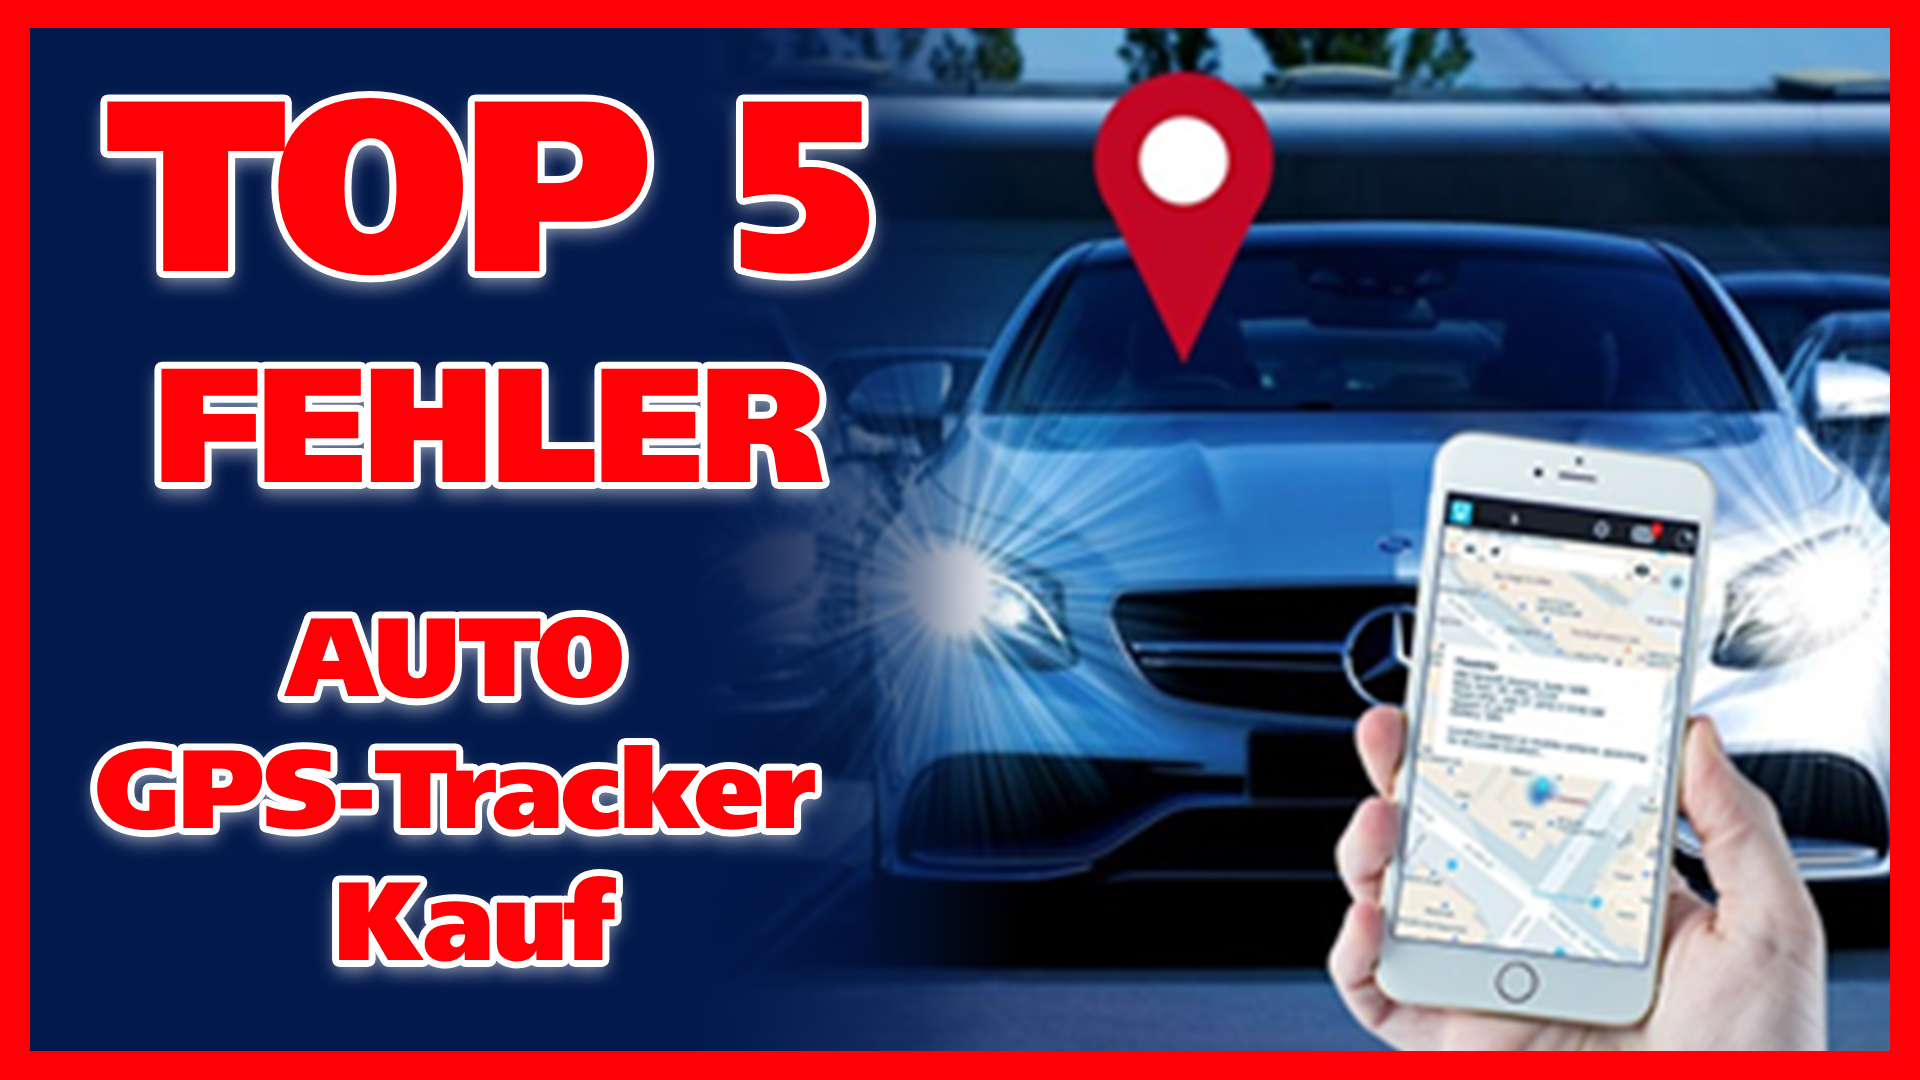 https://www.swisstrack.org/wp-content/uploads/2020/05/thumb_Top-5-Fehler-Kauf-Auto-GPS-Tracker.jpg